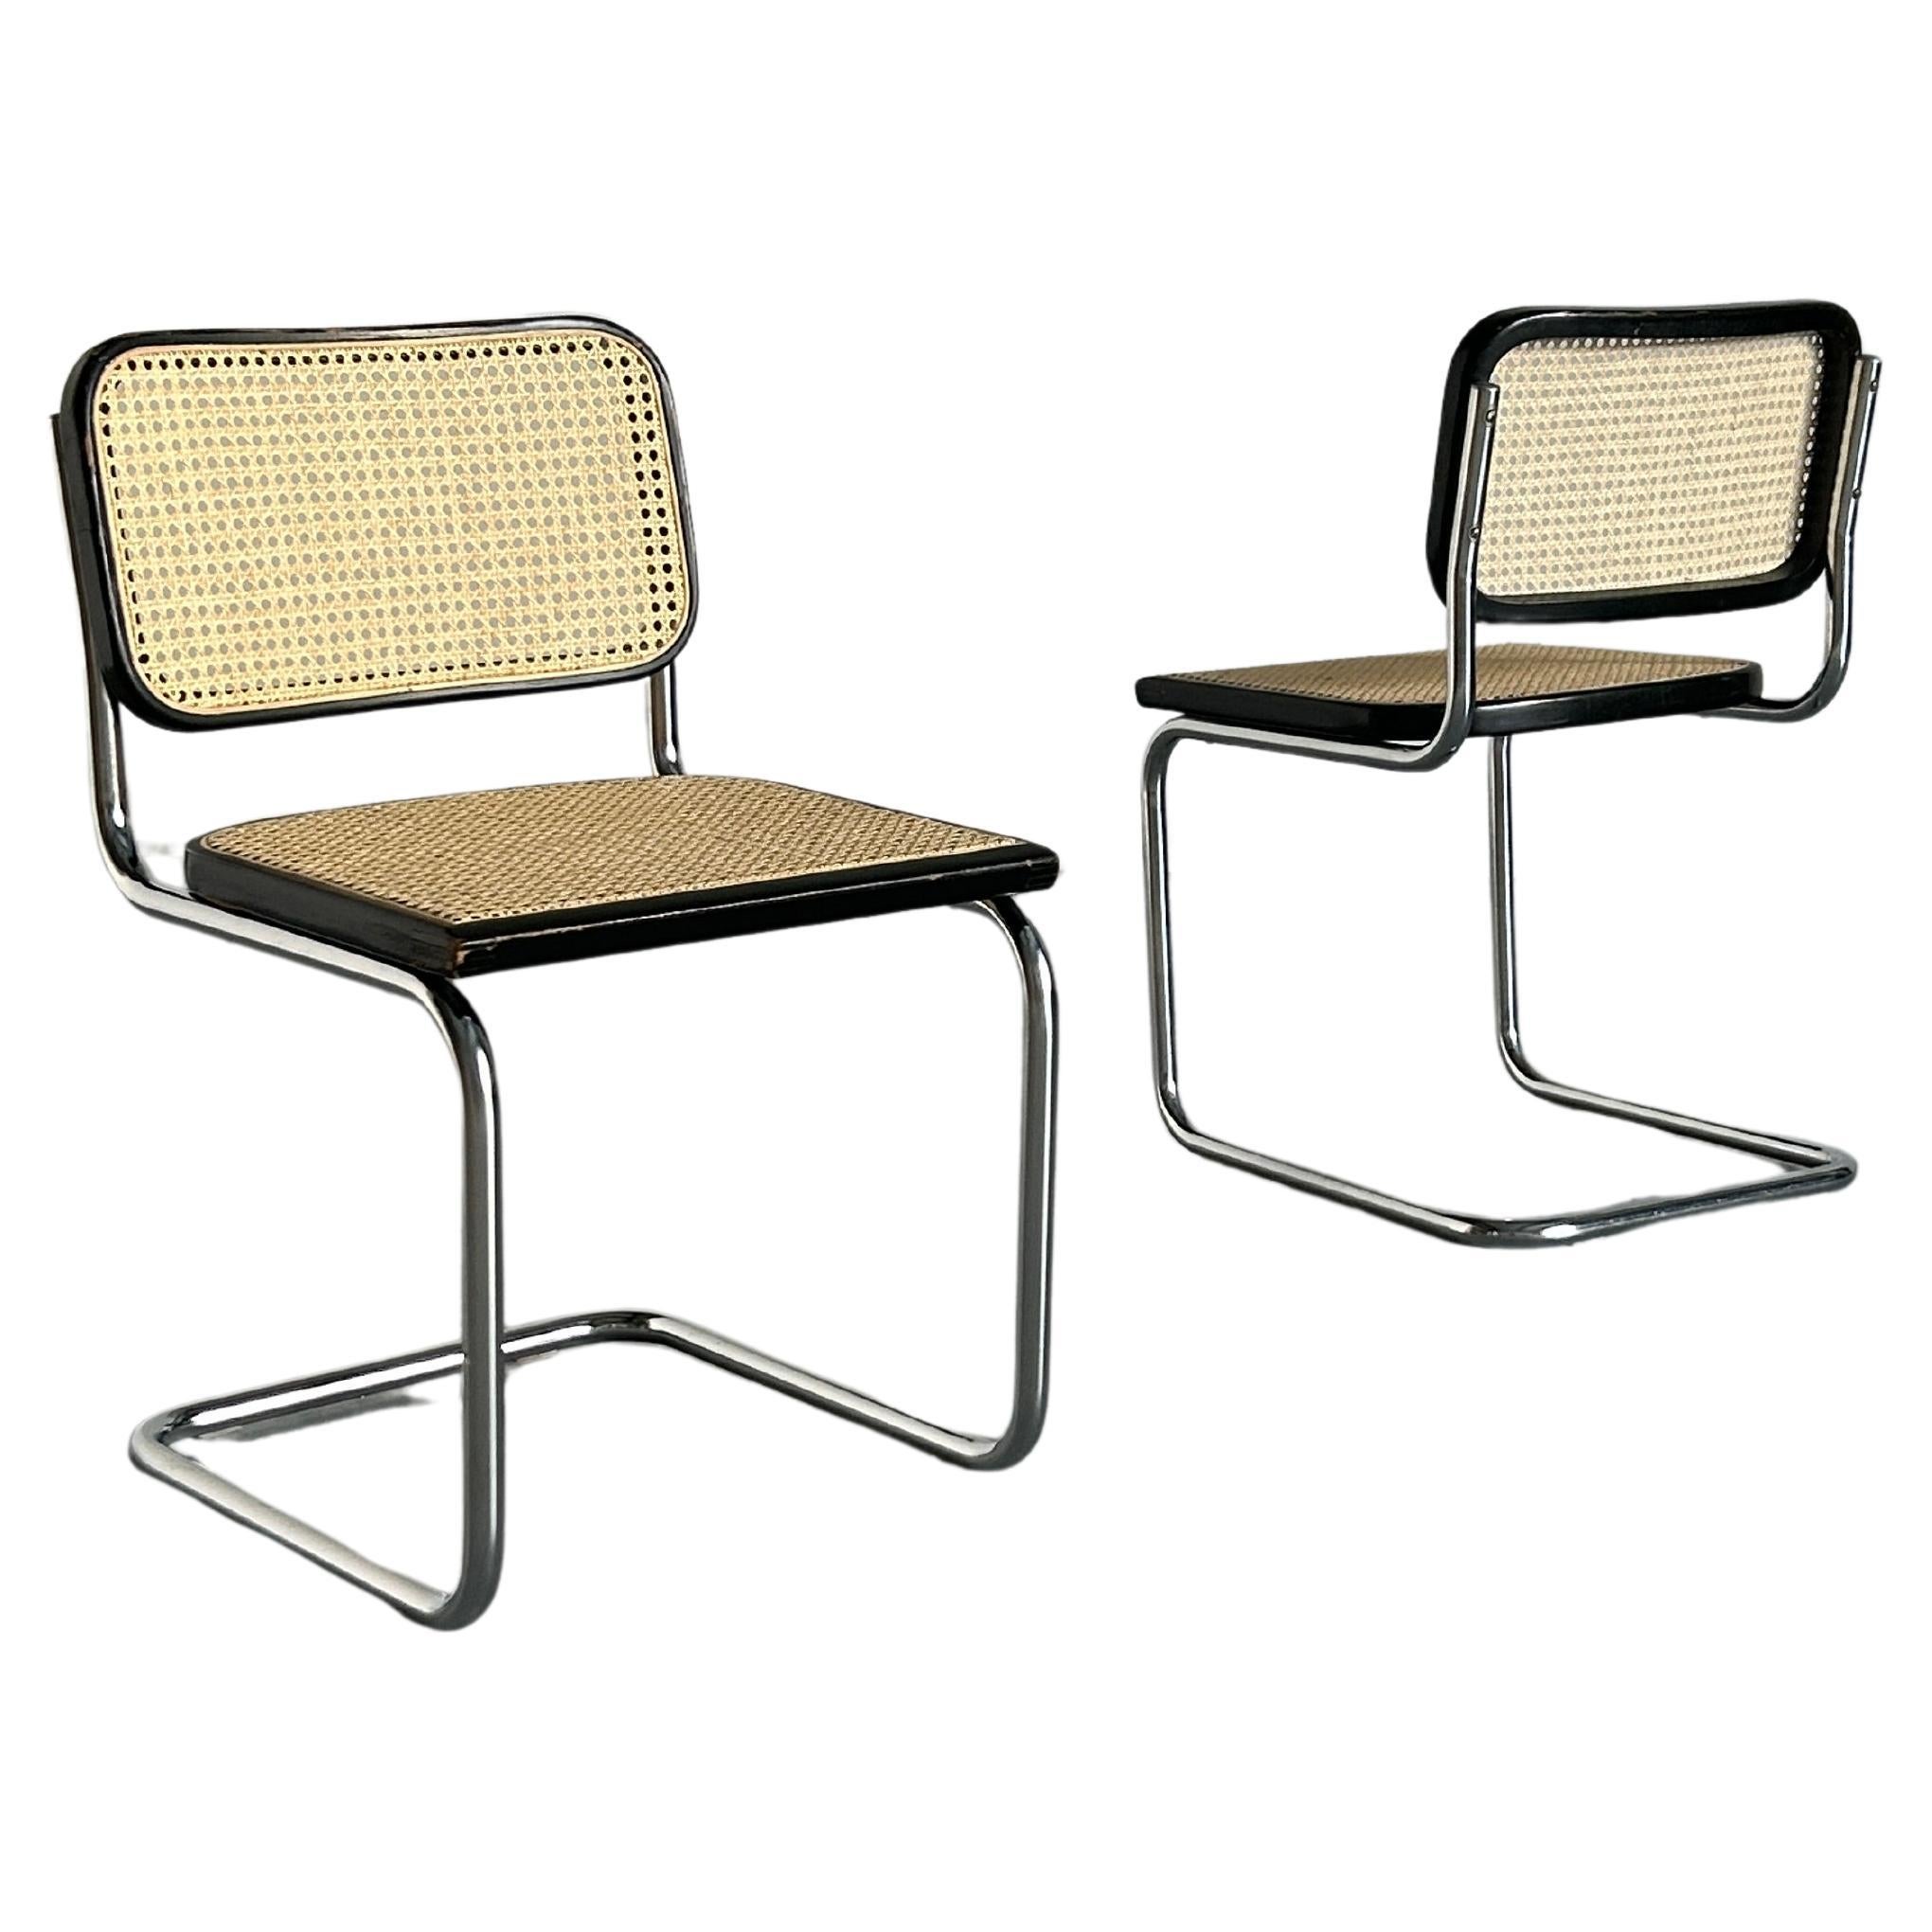 Pair of Vintage Cesca Mid Century Italian Cantilever Chairs, Thonet Mundus For Sale